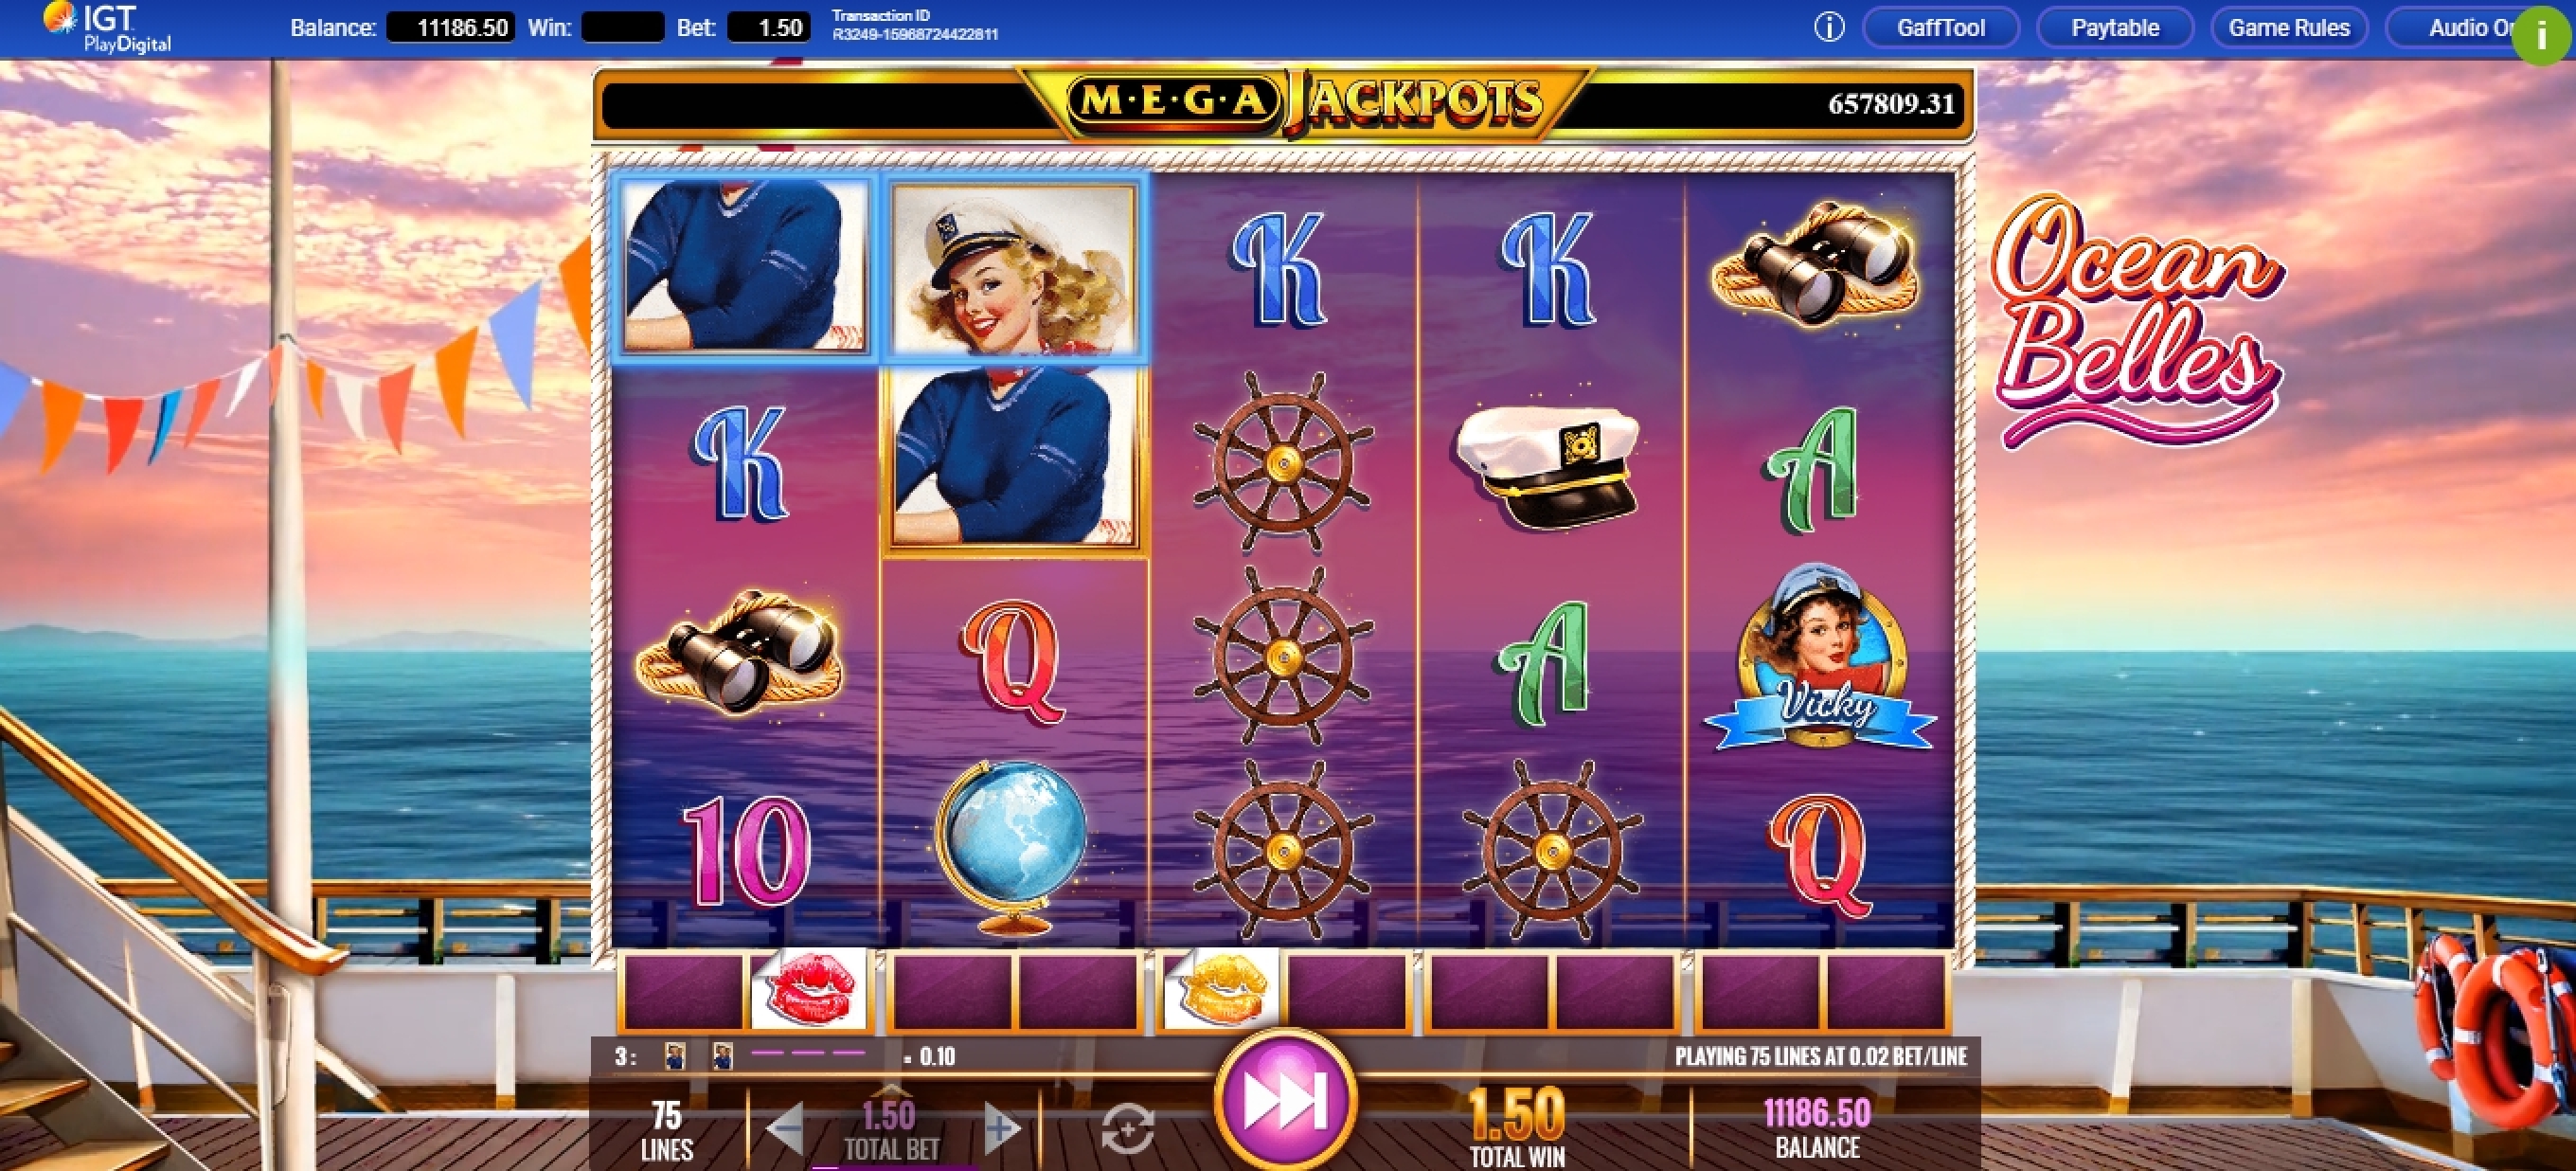 Win Money in Megajackpots Ocean Belles Free Slot Game by IGT